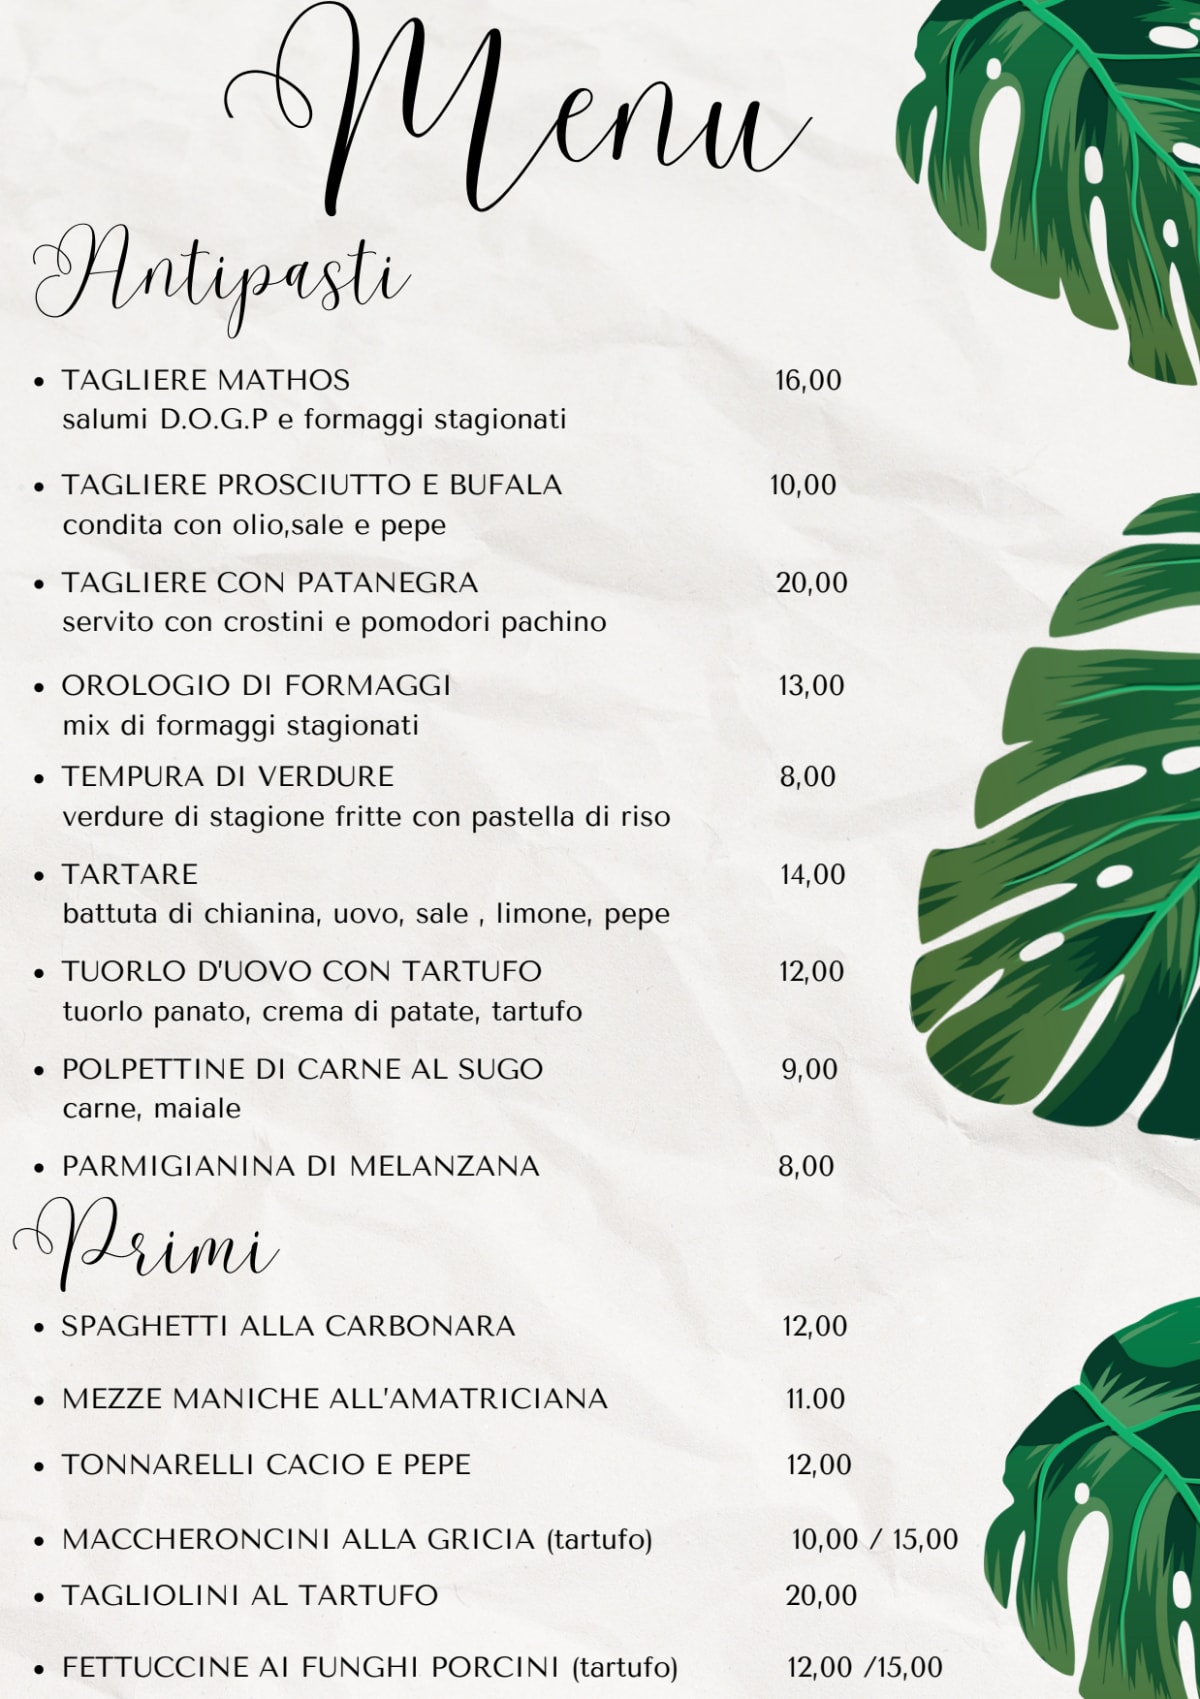 Mathos Restaurant menu